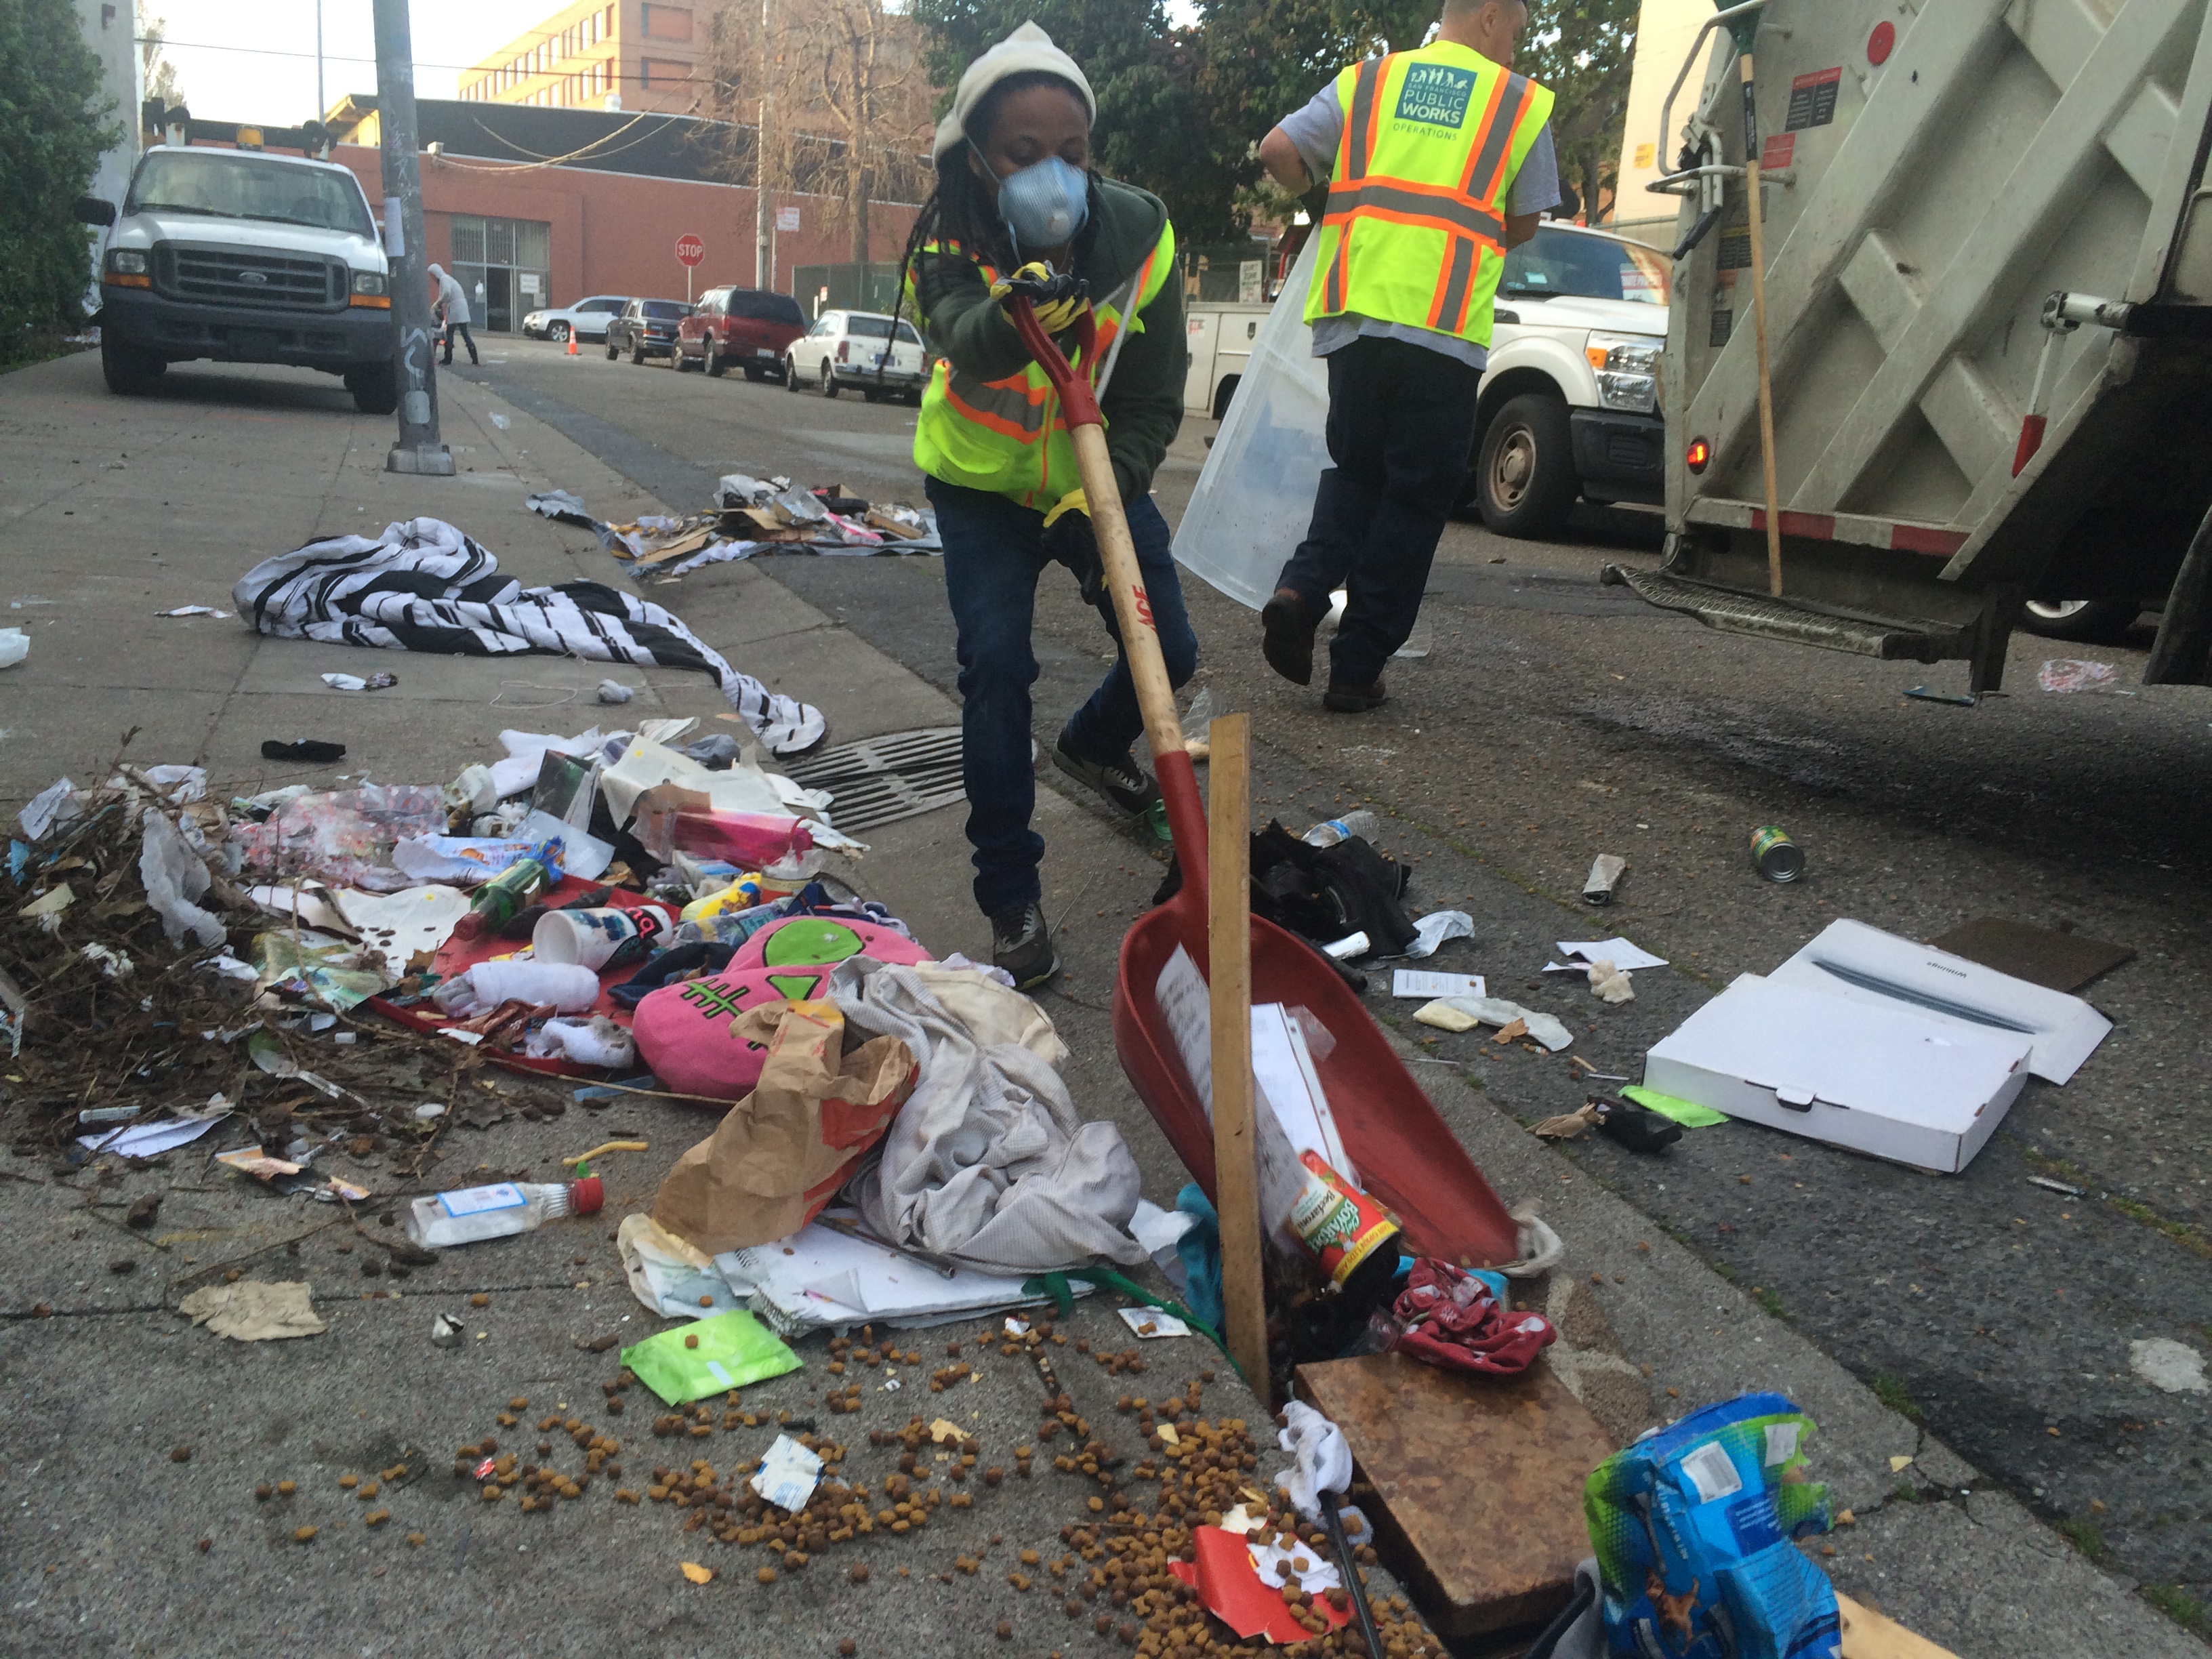 Worker cleaning litter-strewn street